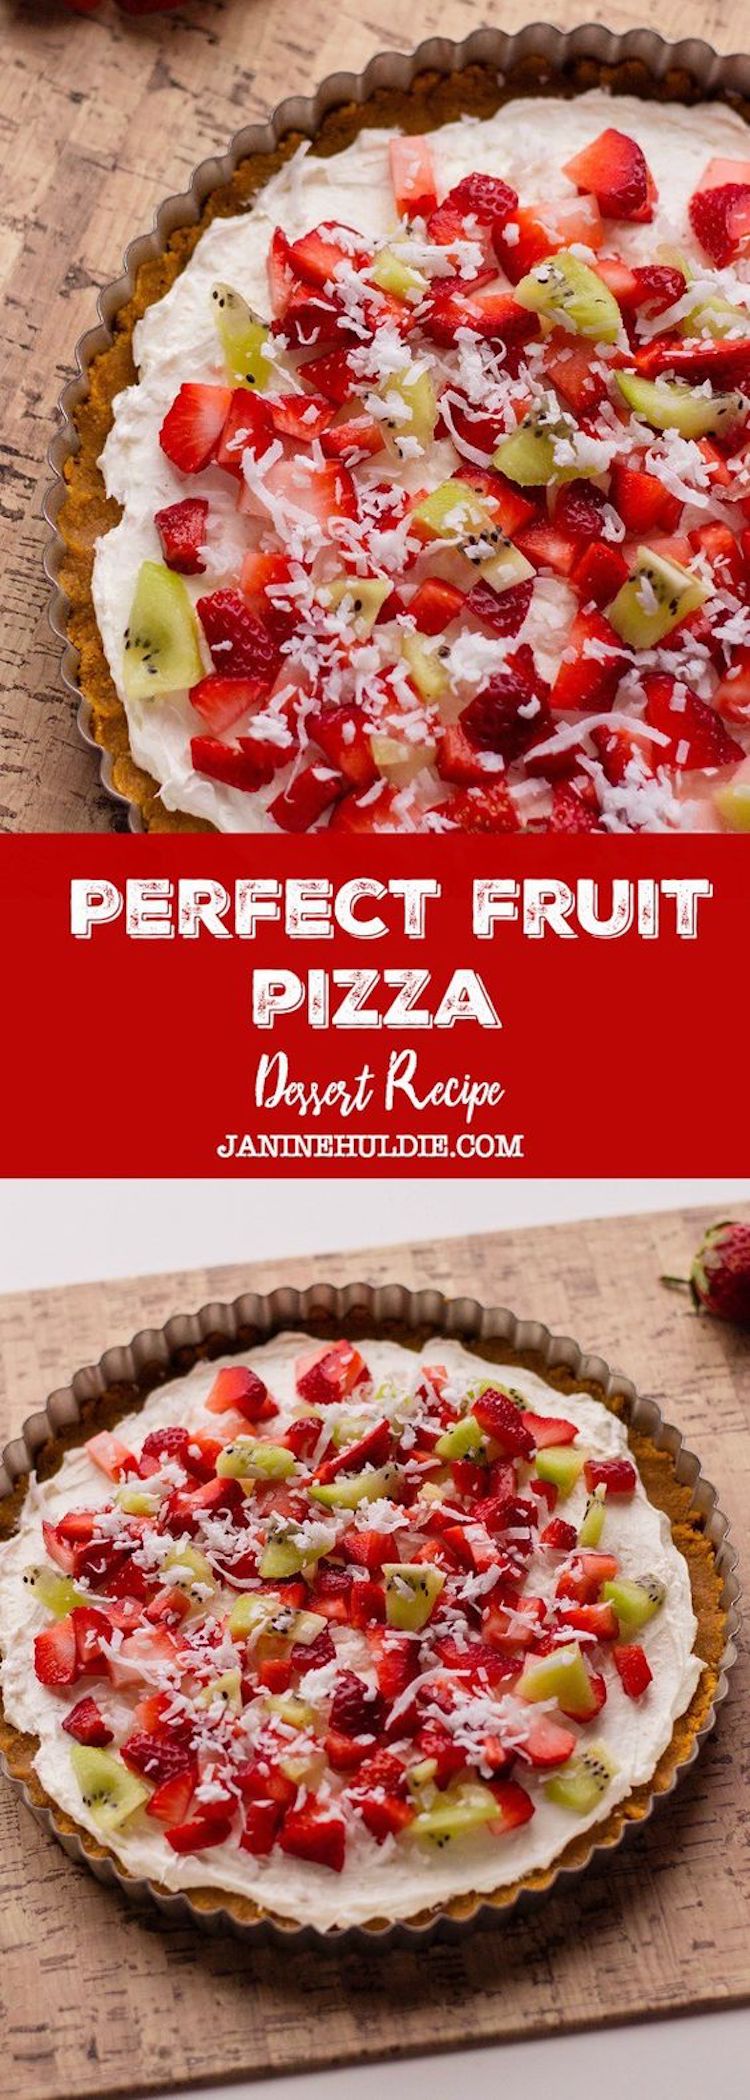 Picture-Perfect Dessert Fruit Pizza Recipe